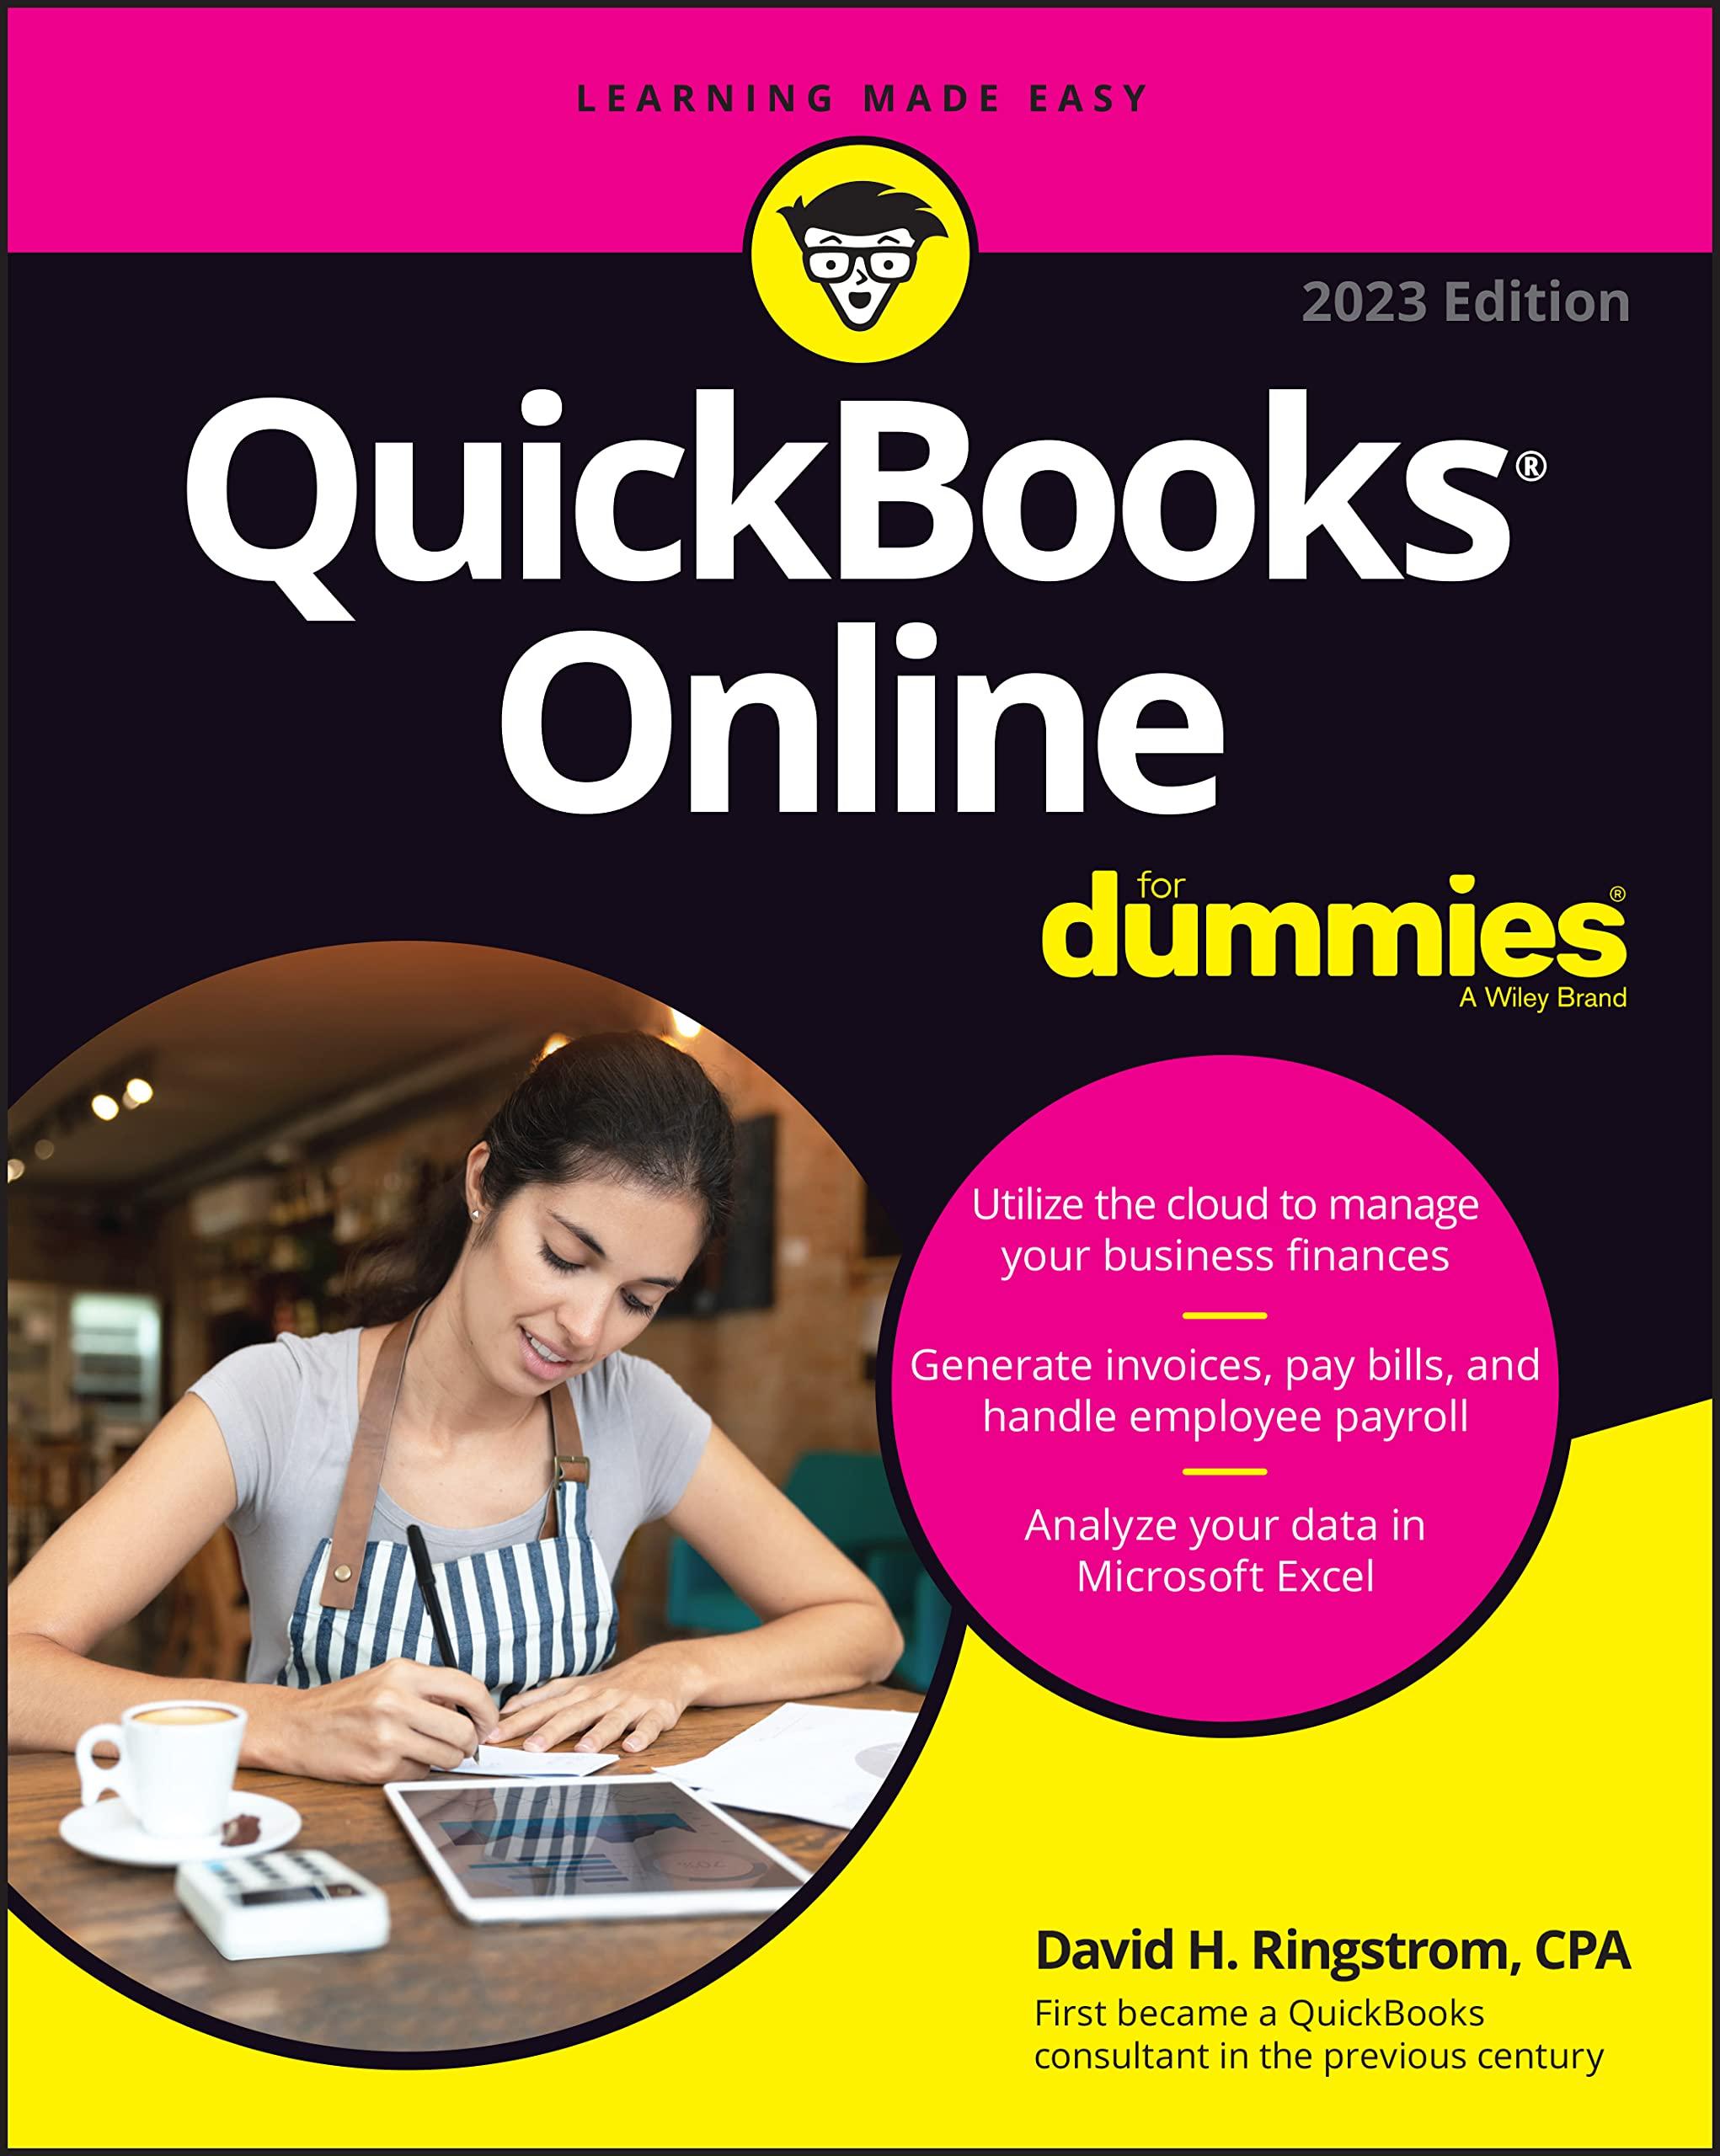 quickbooks online for dummies 2023rd edition david h. ringstrom 1119910005, 978-1119910008